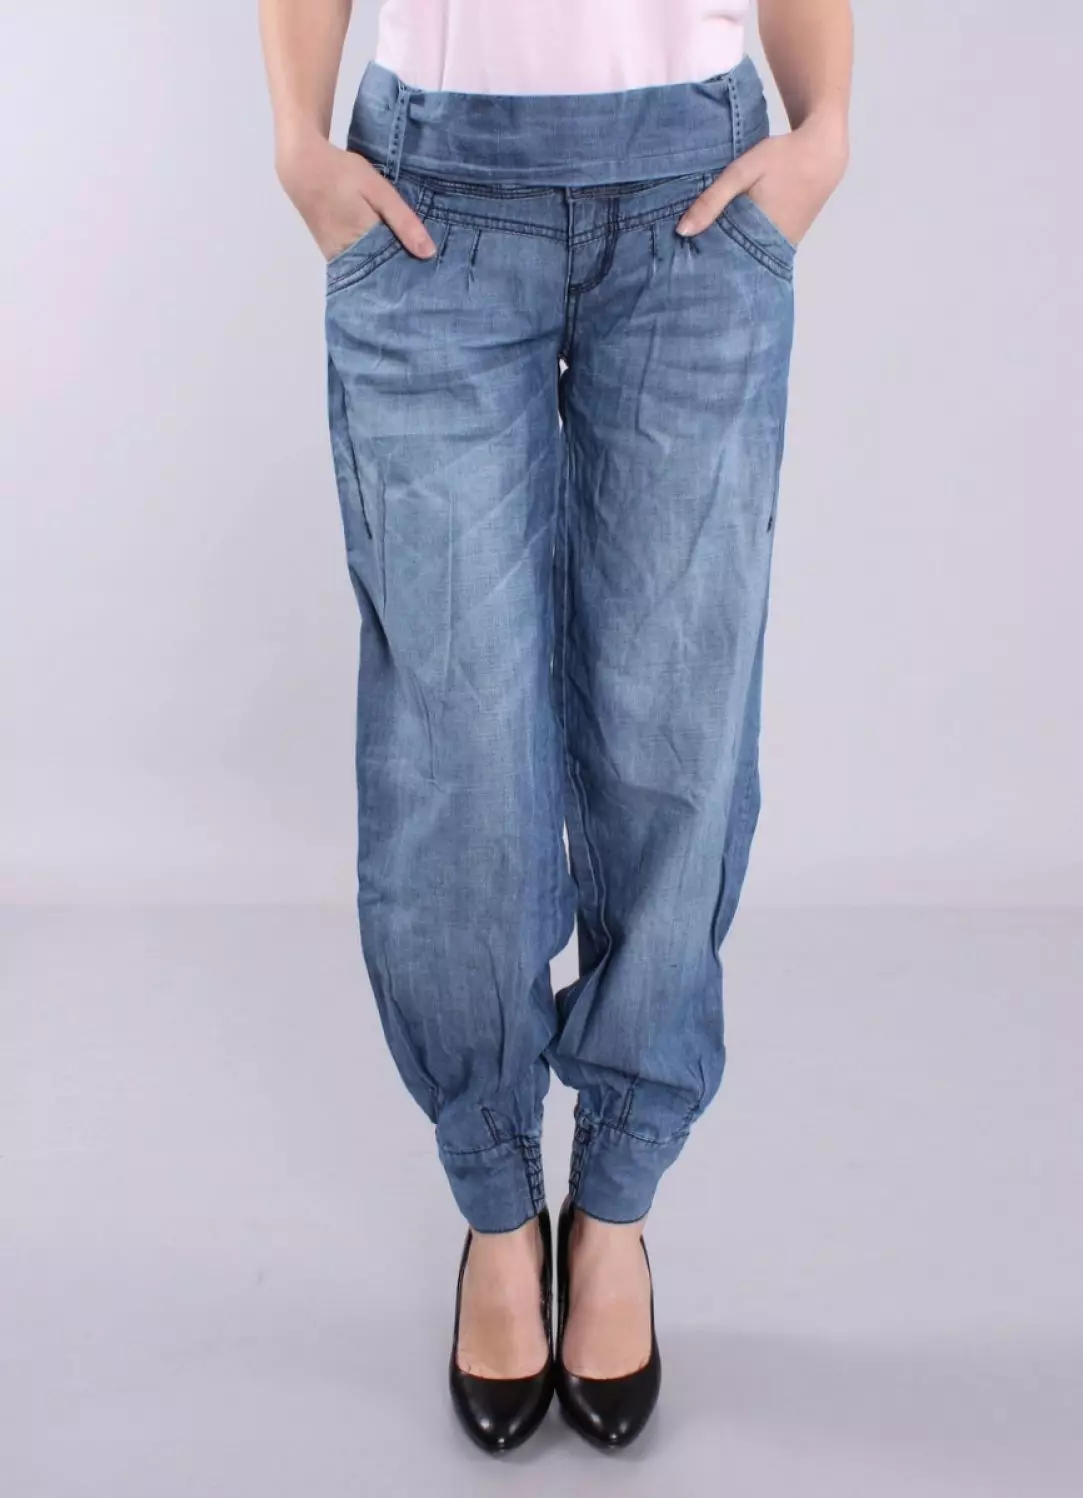 Banana Jeans (57 fotos): Modelos de mujeres, con qué usar 1109_15